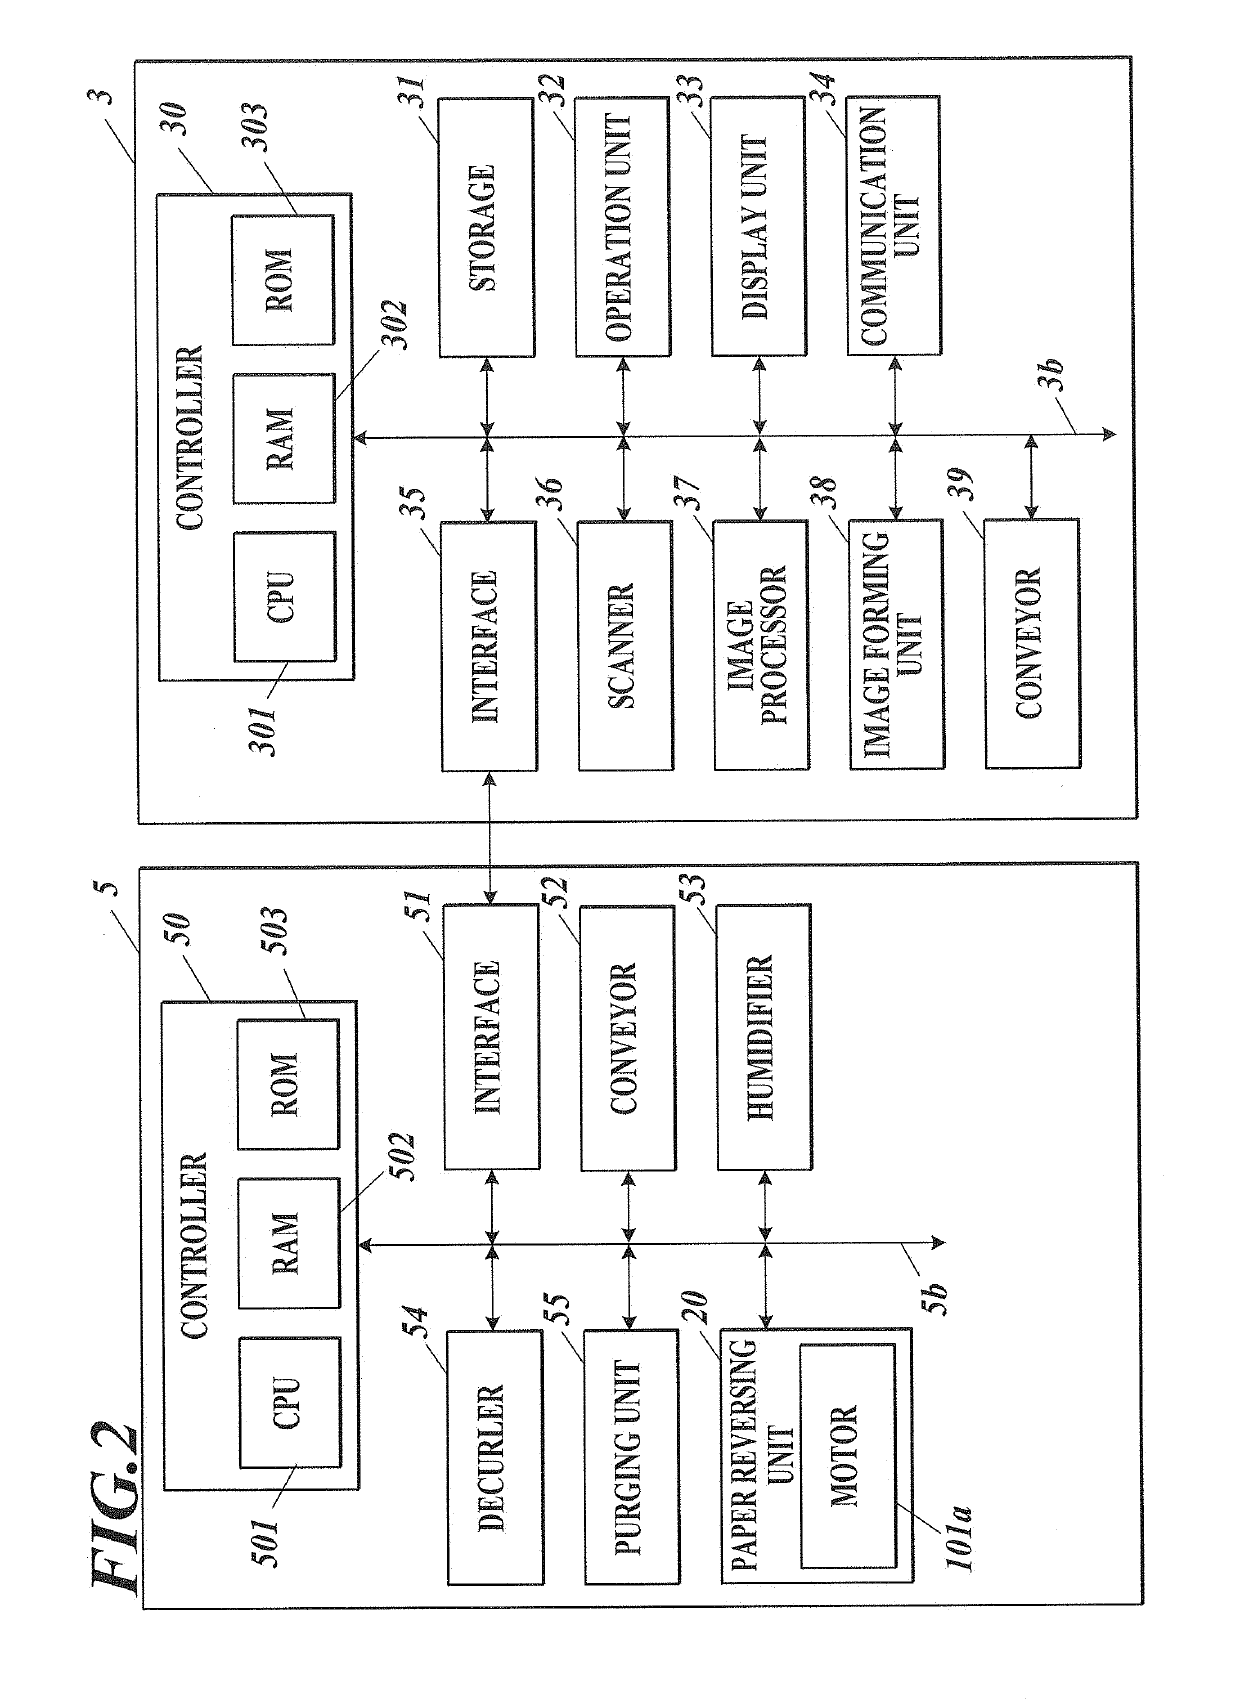 Paper reversing apparatus, image forming system and computer readable storage medium storing program